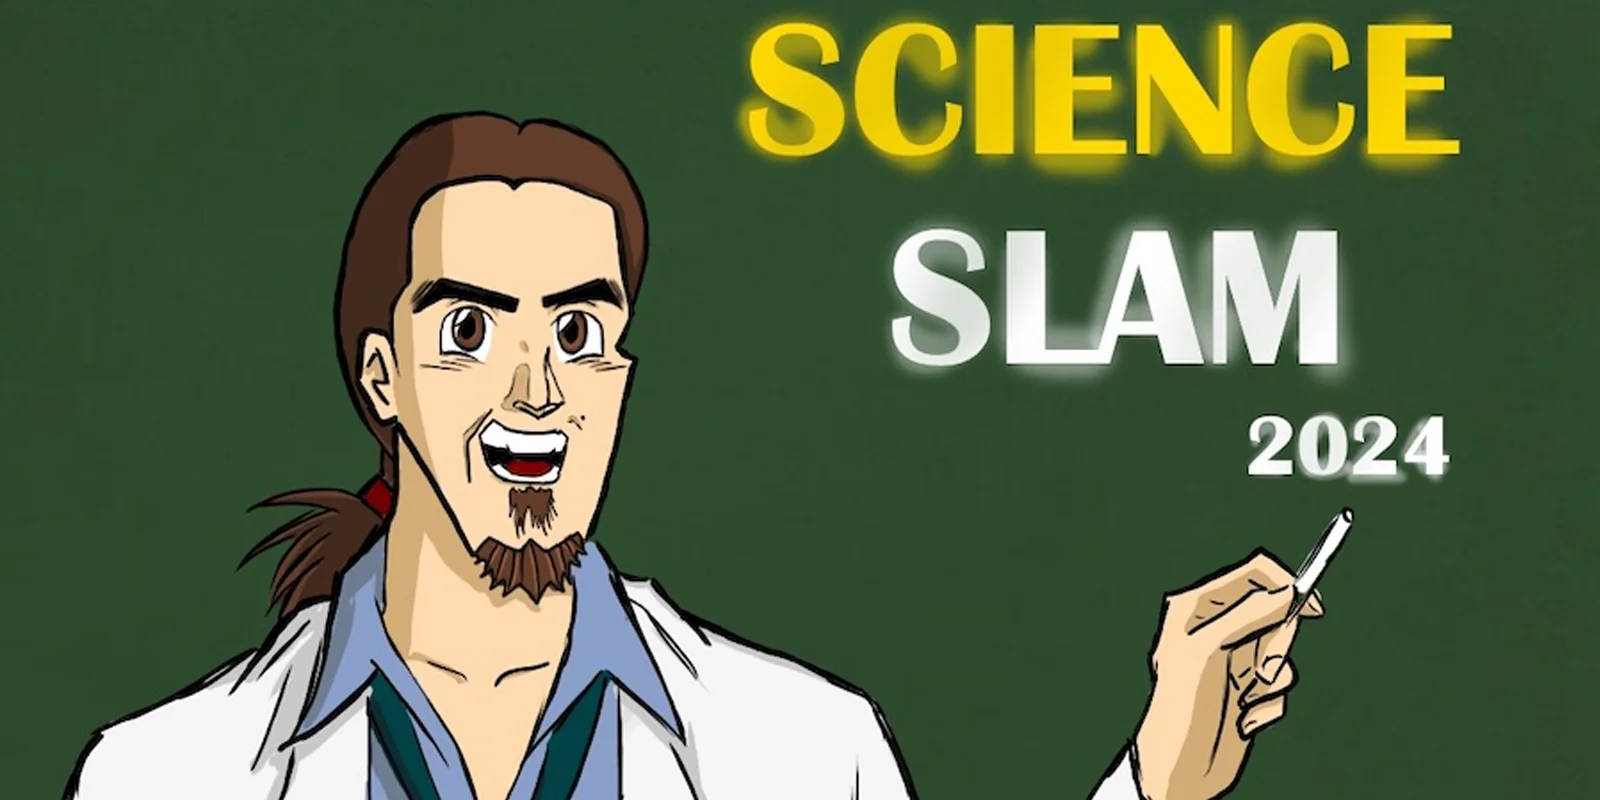 Manga "Science Slam"